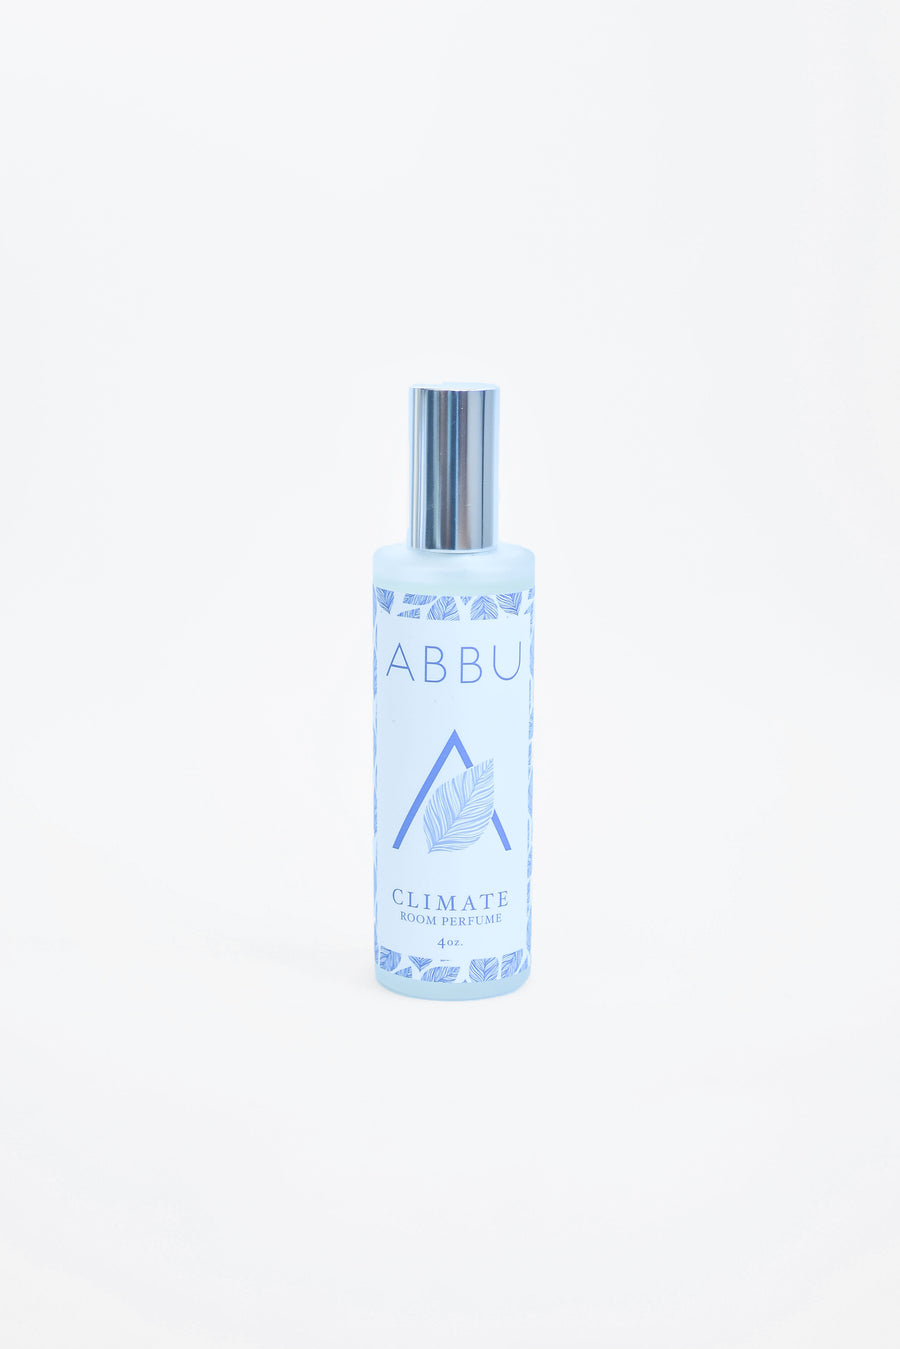 Abbu Room Perfume Climate, 8 OZ